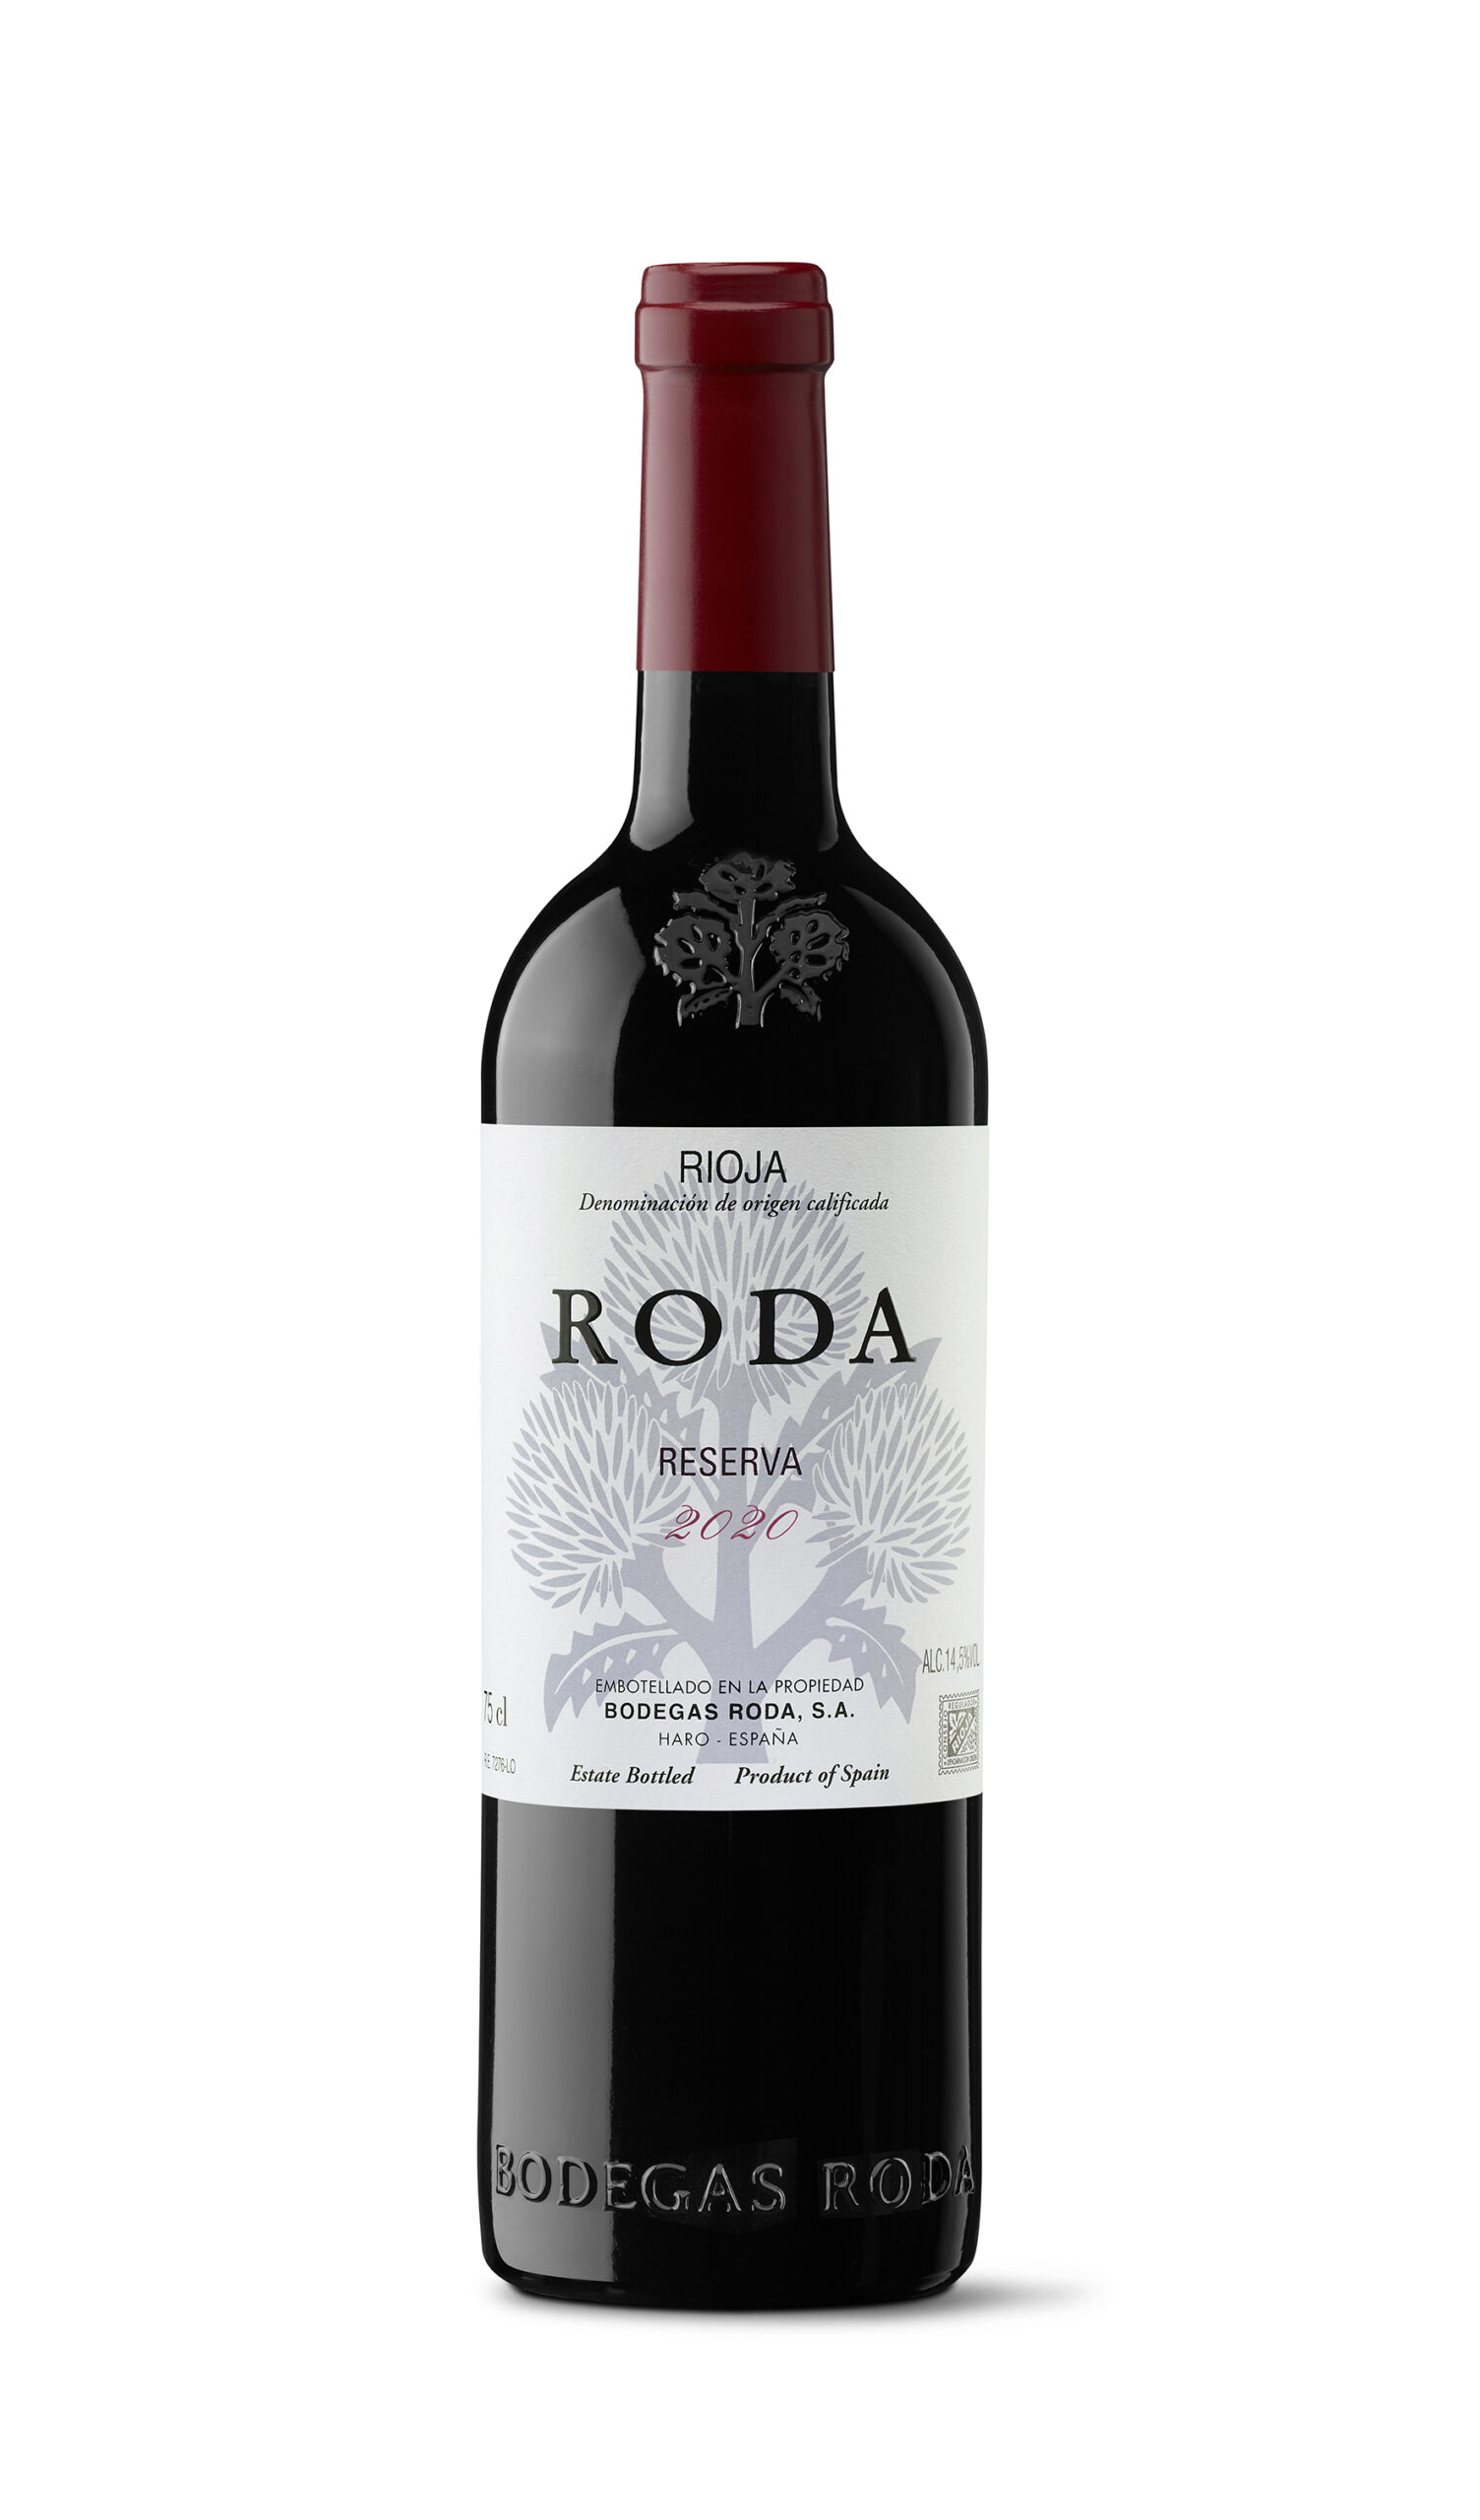 RIOJA

Denominacion de origen calificada

RO DA

RESERVA
2020

EMBOTELLADO EN LA PROPIEDAD
BODEGAS RODA, S.A.
HARQ - ESPANA

i

Estate Bottled ~~ Product of Spain